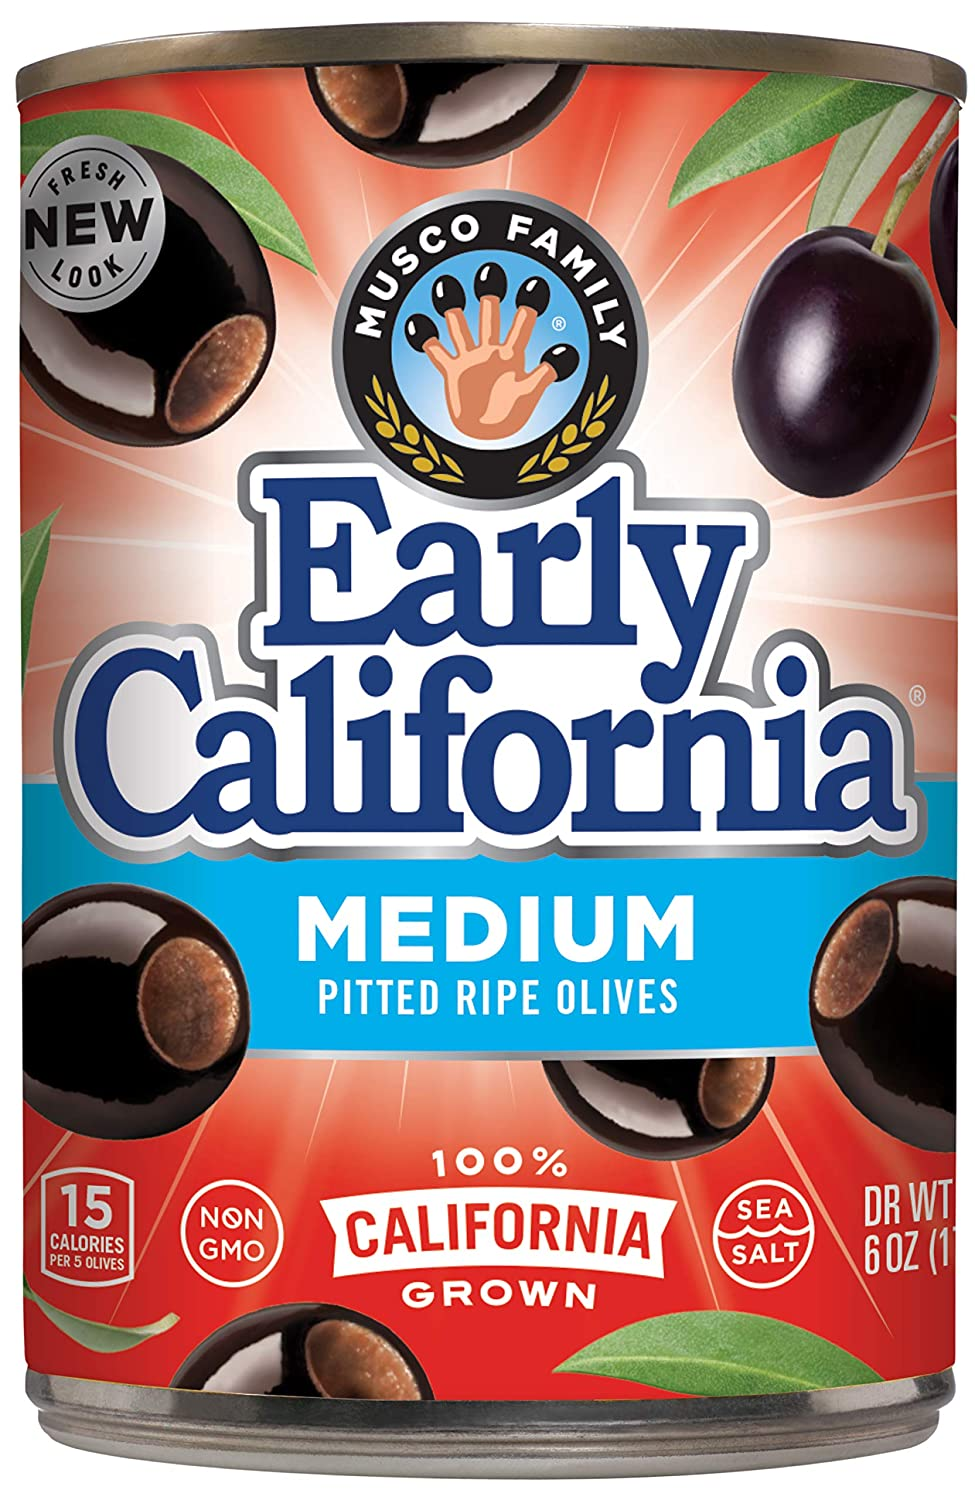 Pack of 12 Early California Medium Black Olives $1.99